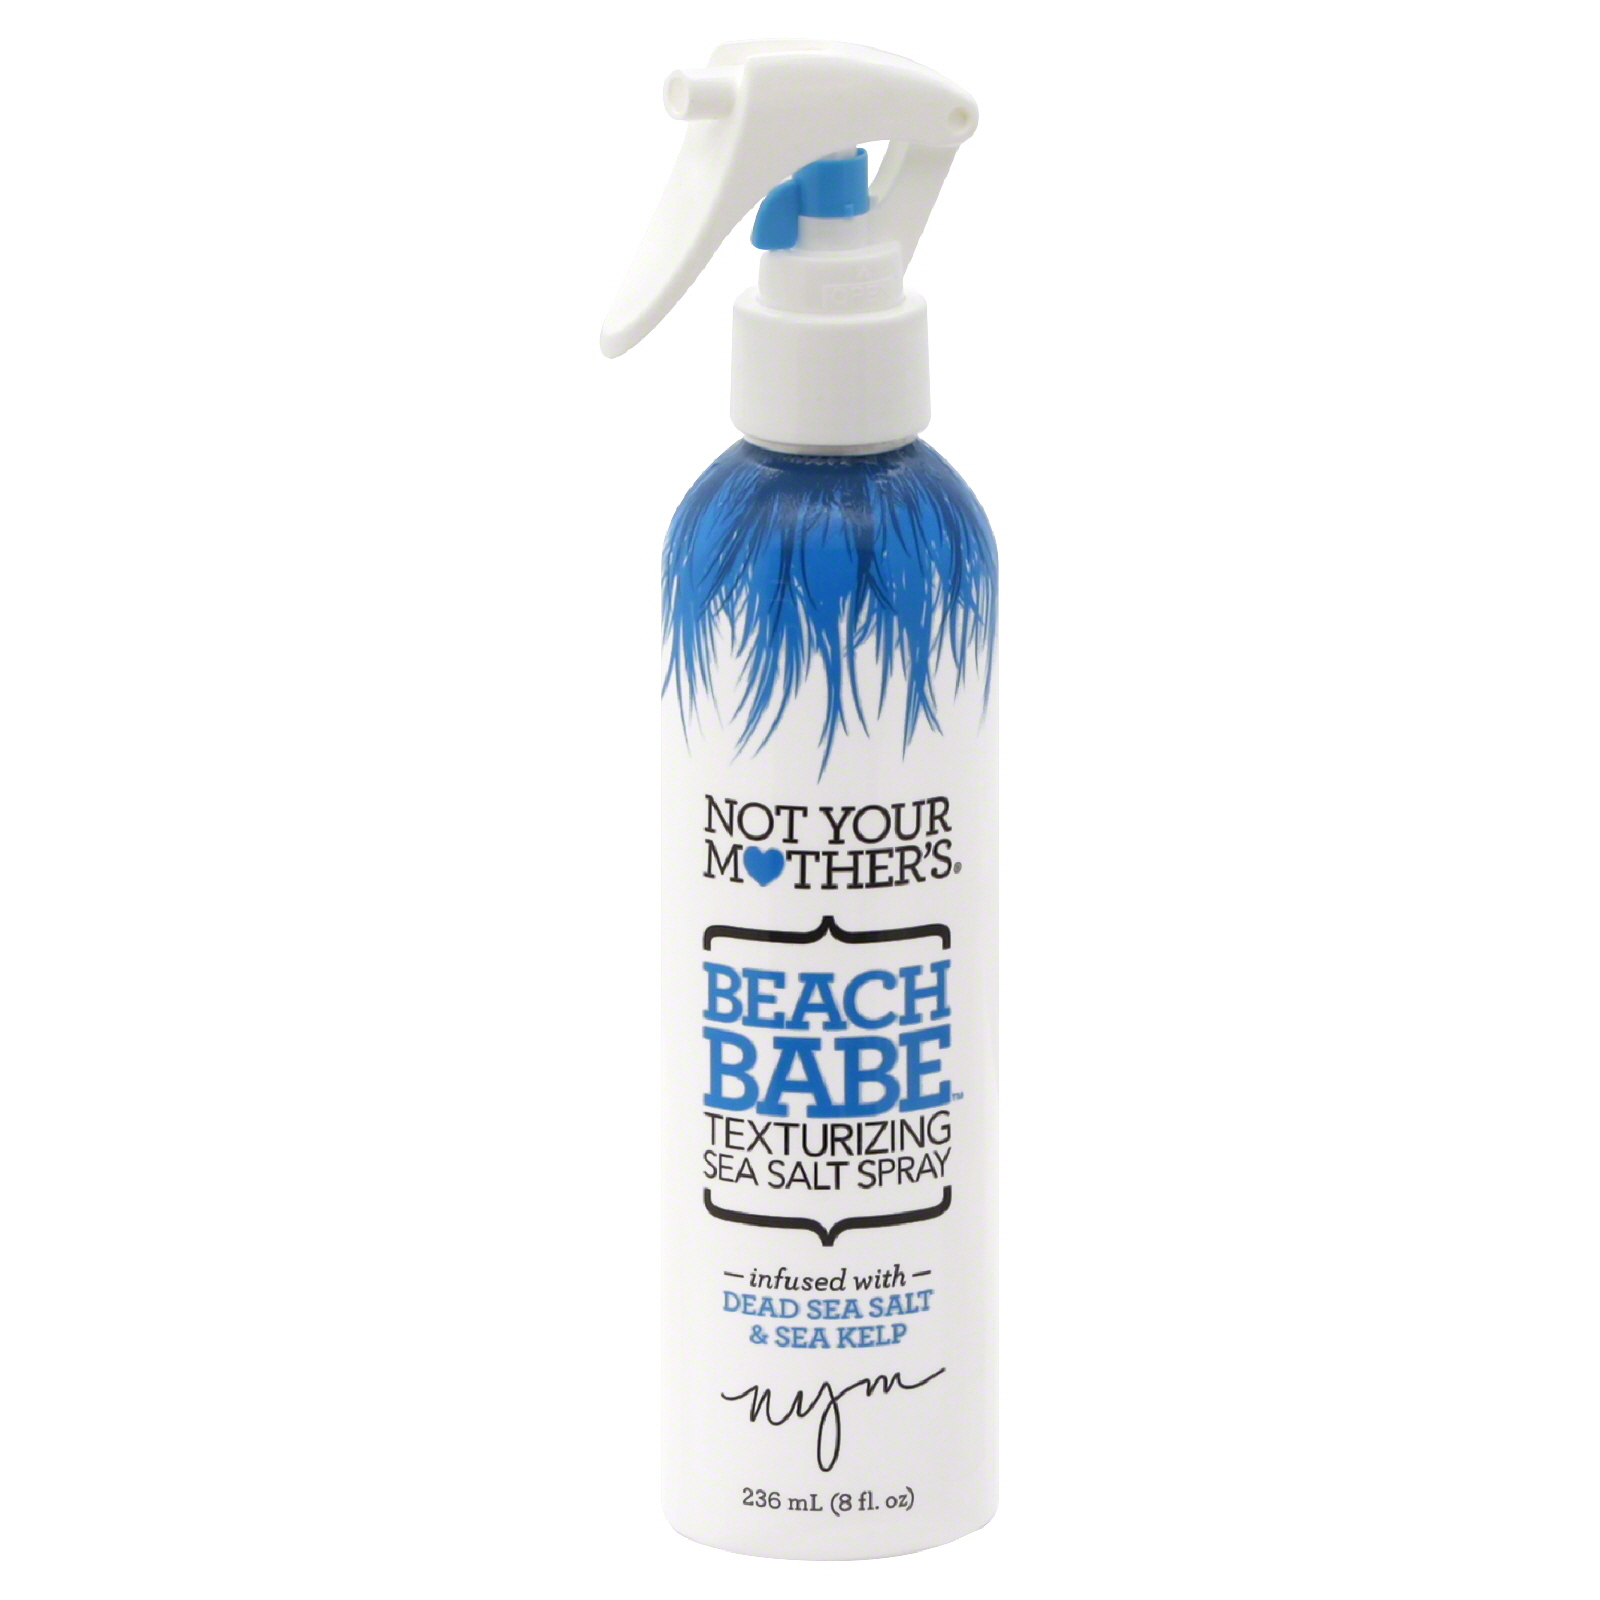 Not Your Mothers Sea Salt Spray, Texturizing, Beach Babe, 8 fl oz (236 ml)